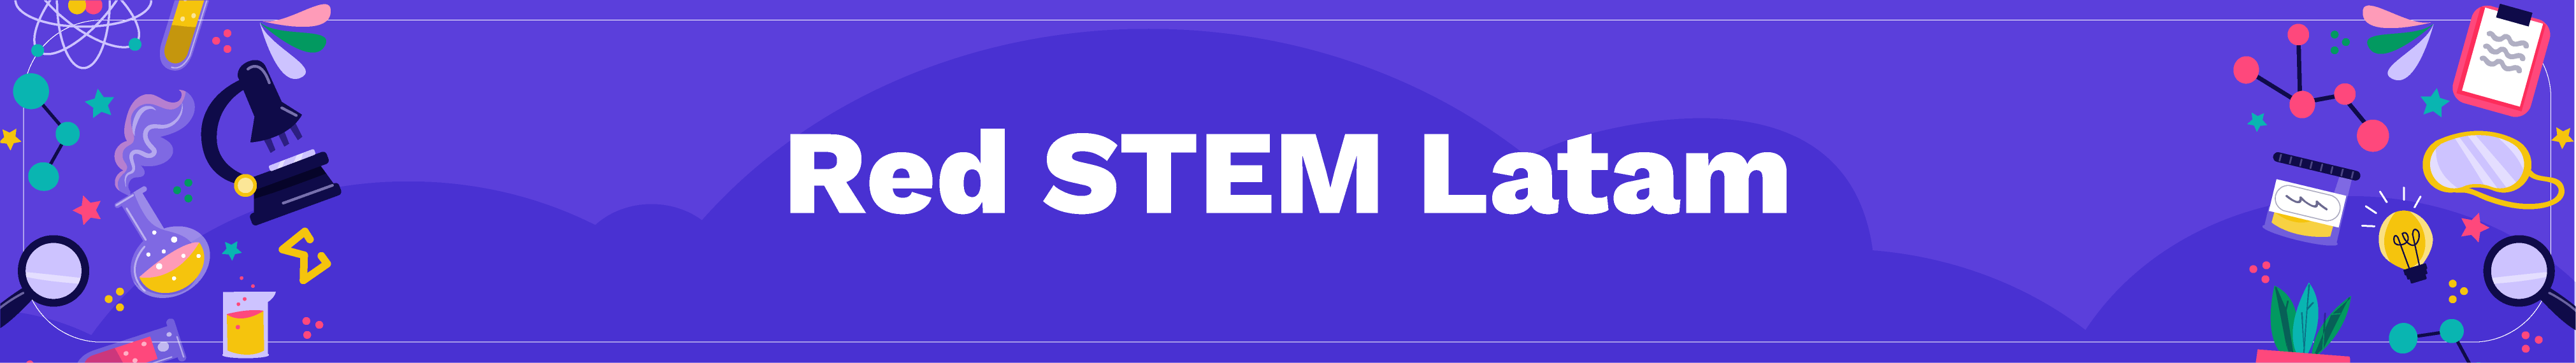 Banner RED STEM Latam (Latinoamérica)